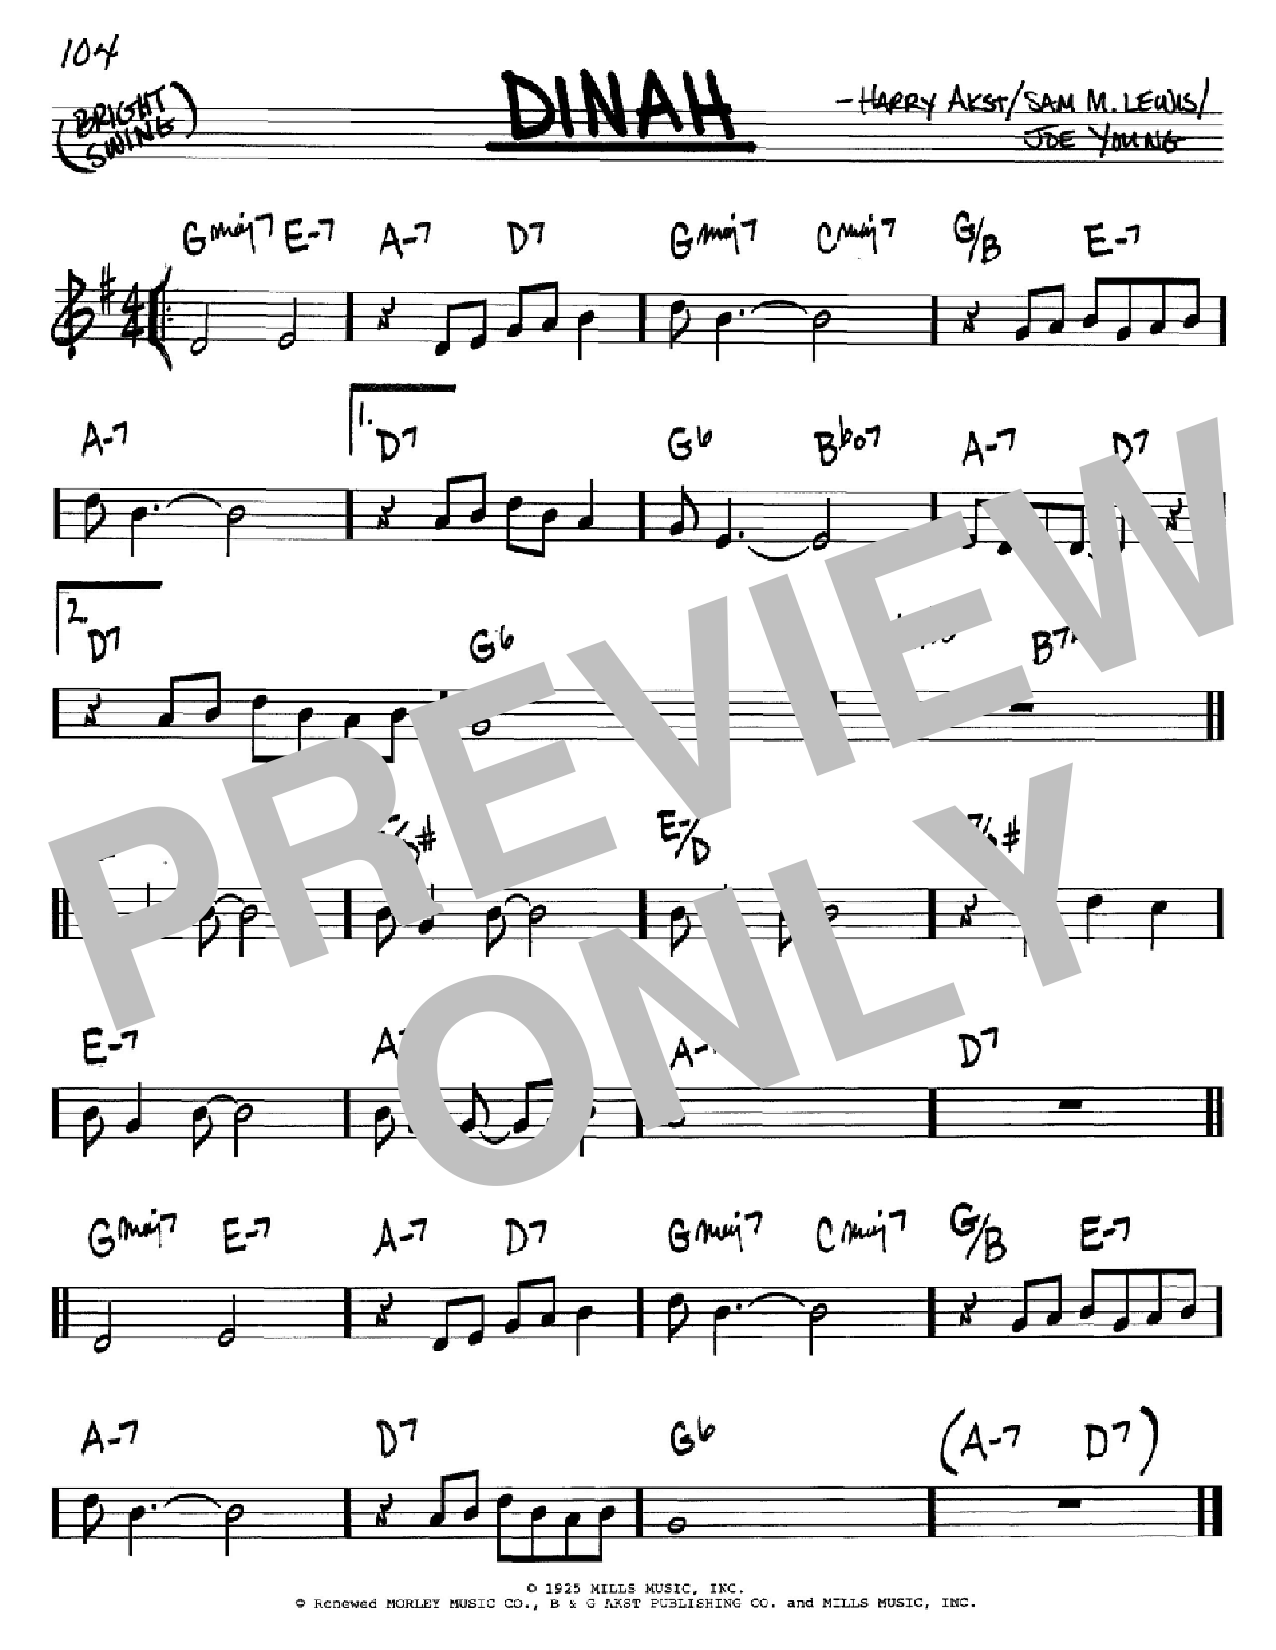 Harry Akst Dinah Sheet Music Notes & Chords for Banjo - Download or Print PDF